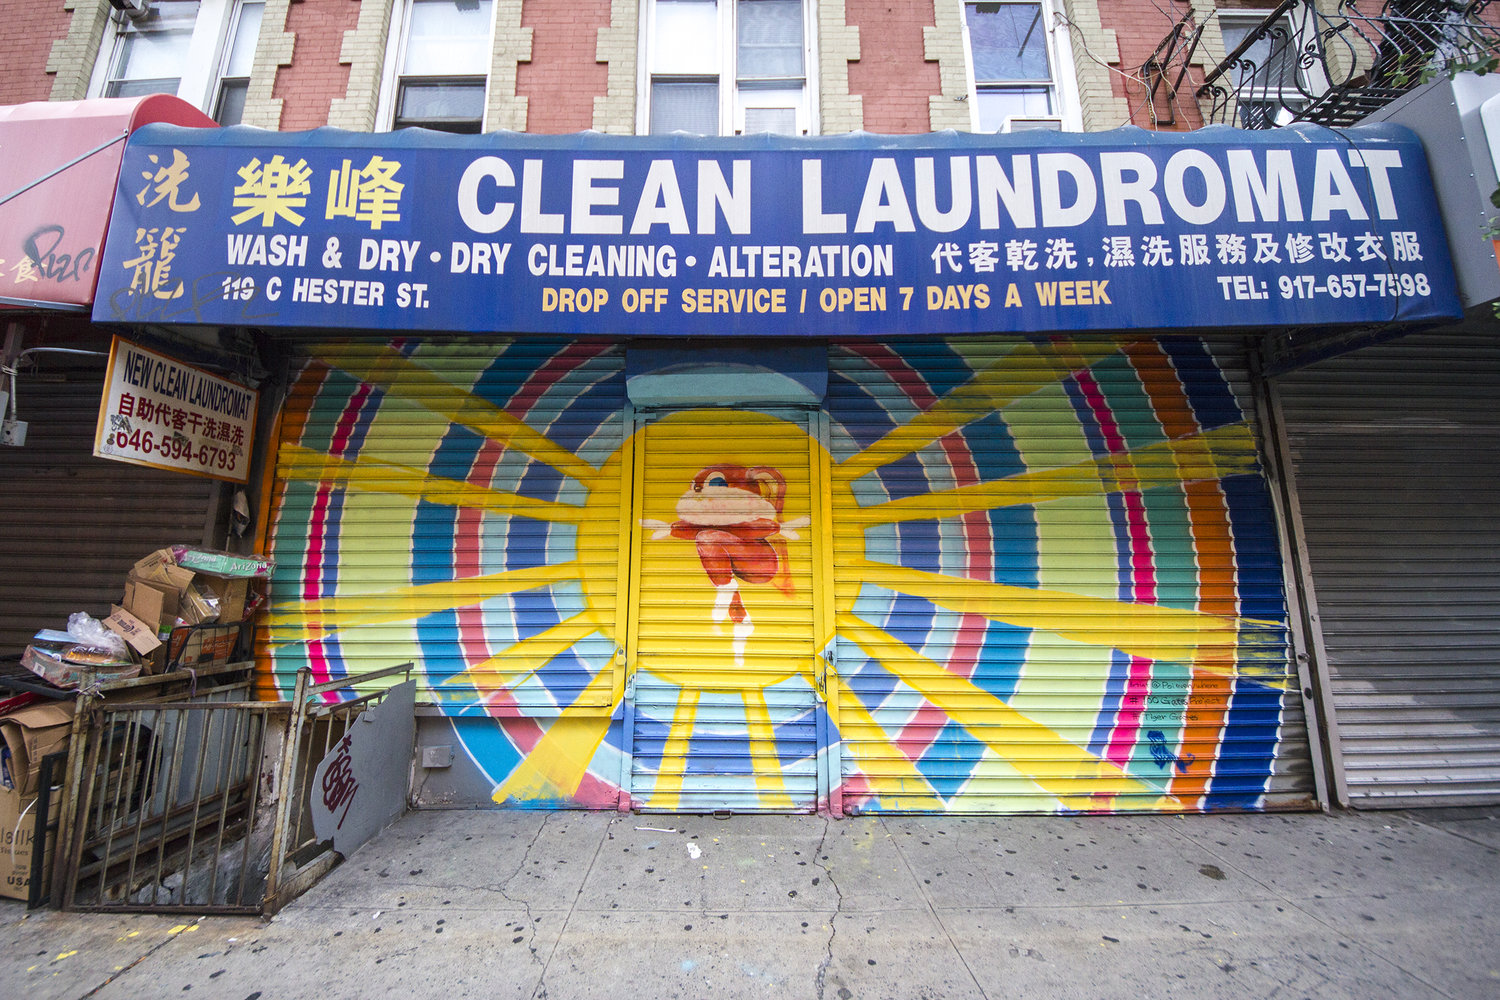  New Clean Laundromat @ 119 Hester Street Artwork by Poieverywhere //&nbsp;#TigerGates 